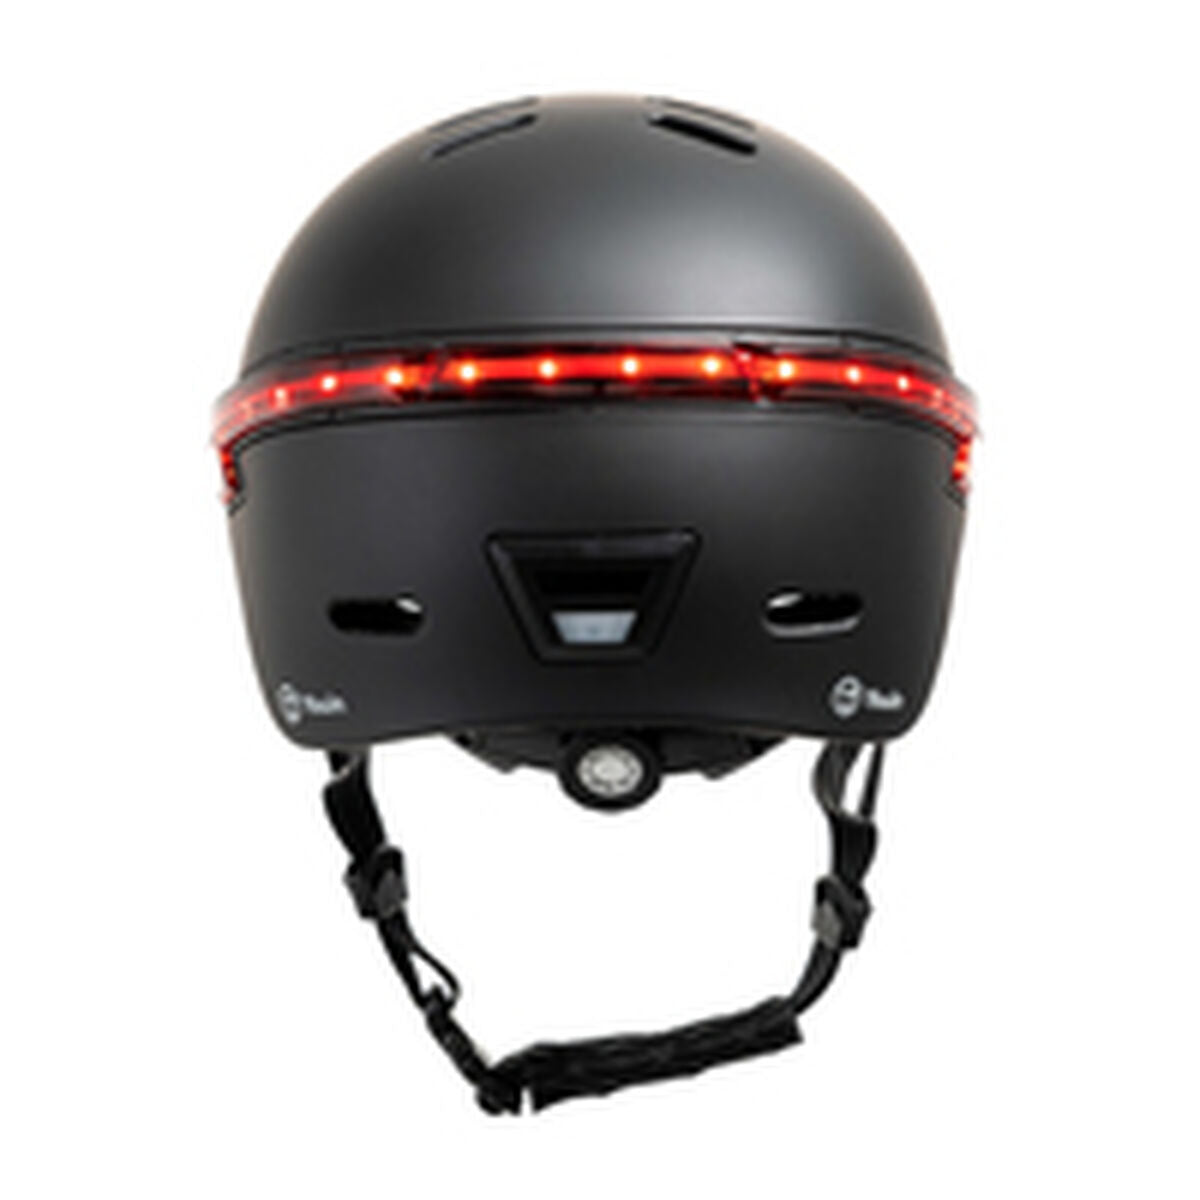 Helm für Elektroroller Youin MA1015